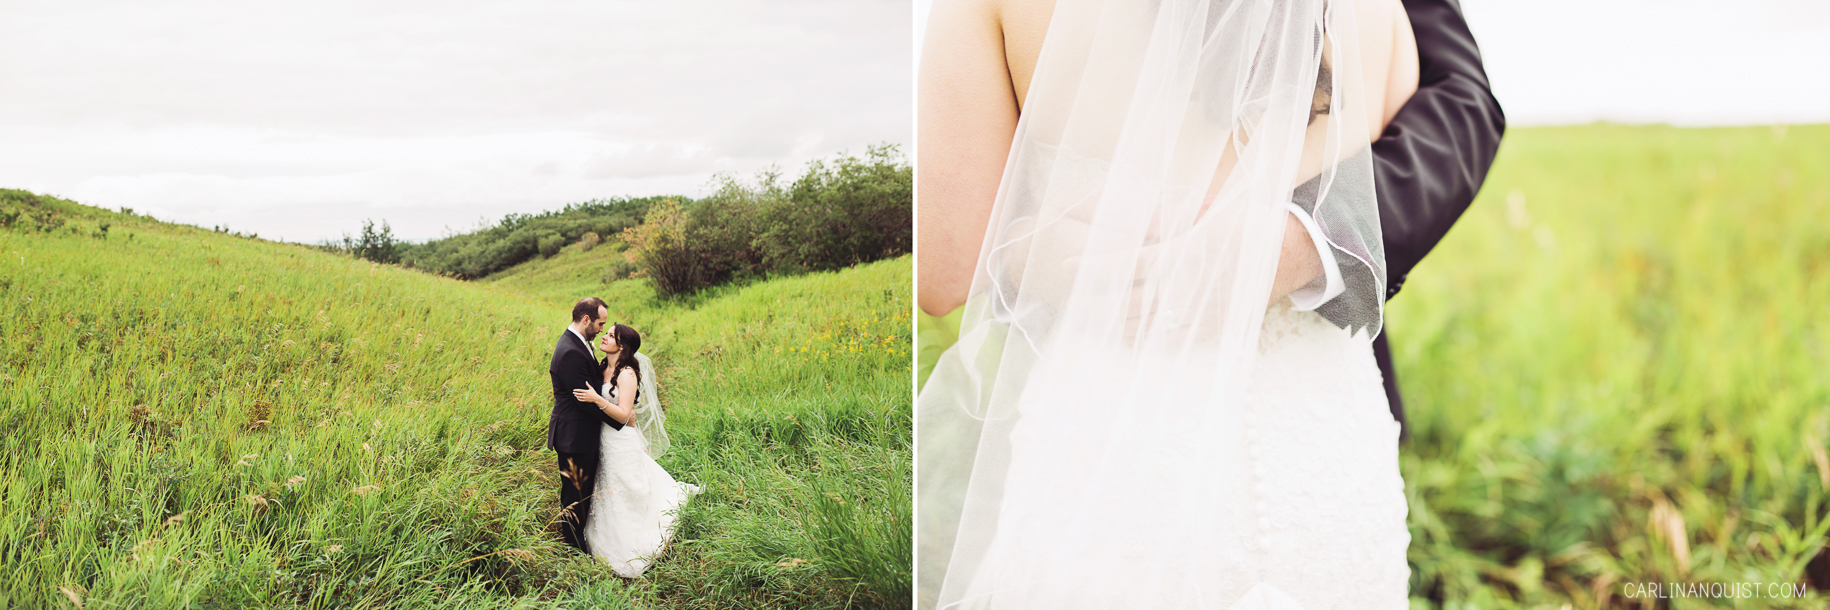 Bride & Groom | Calgary Wedding Photographer